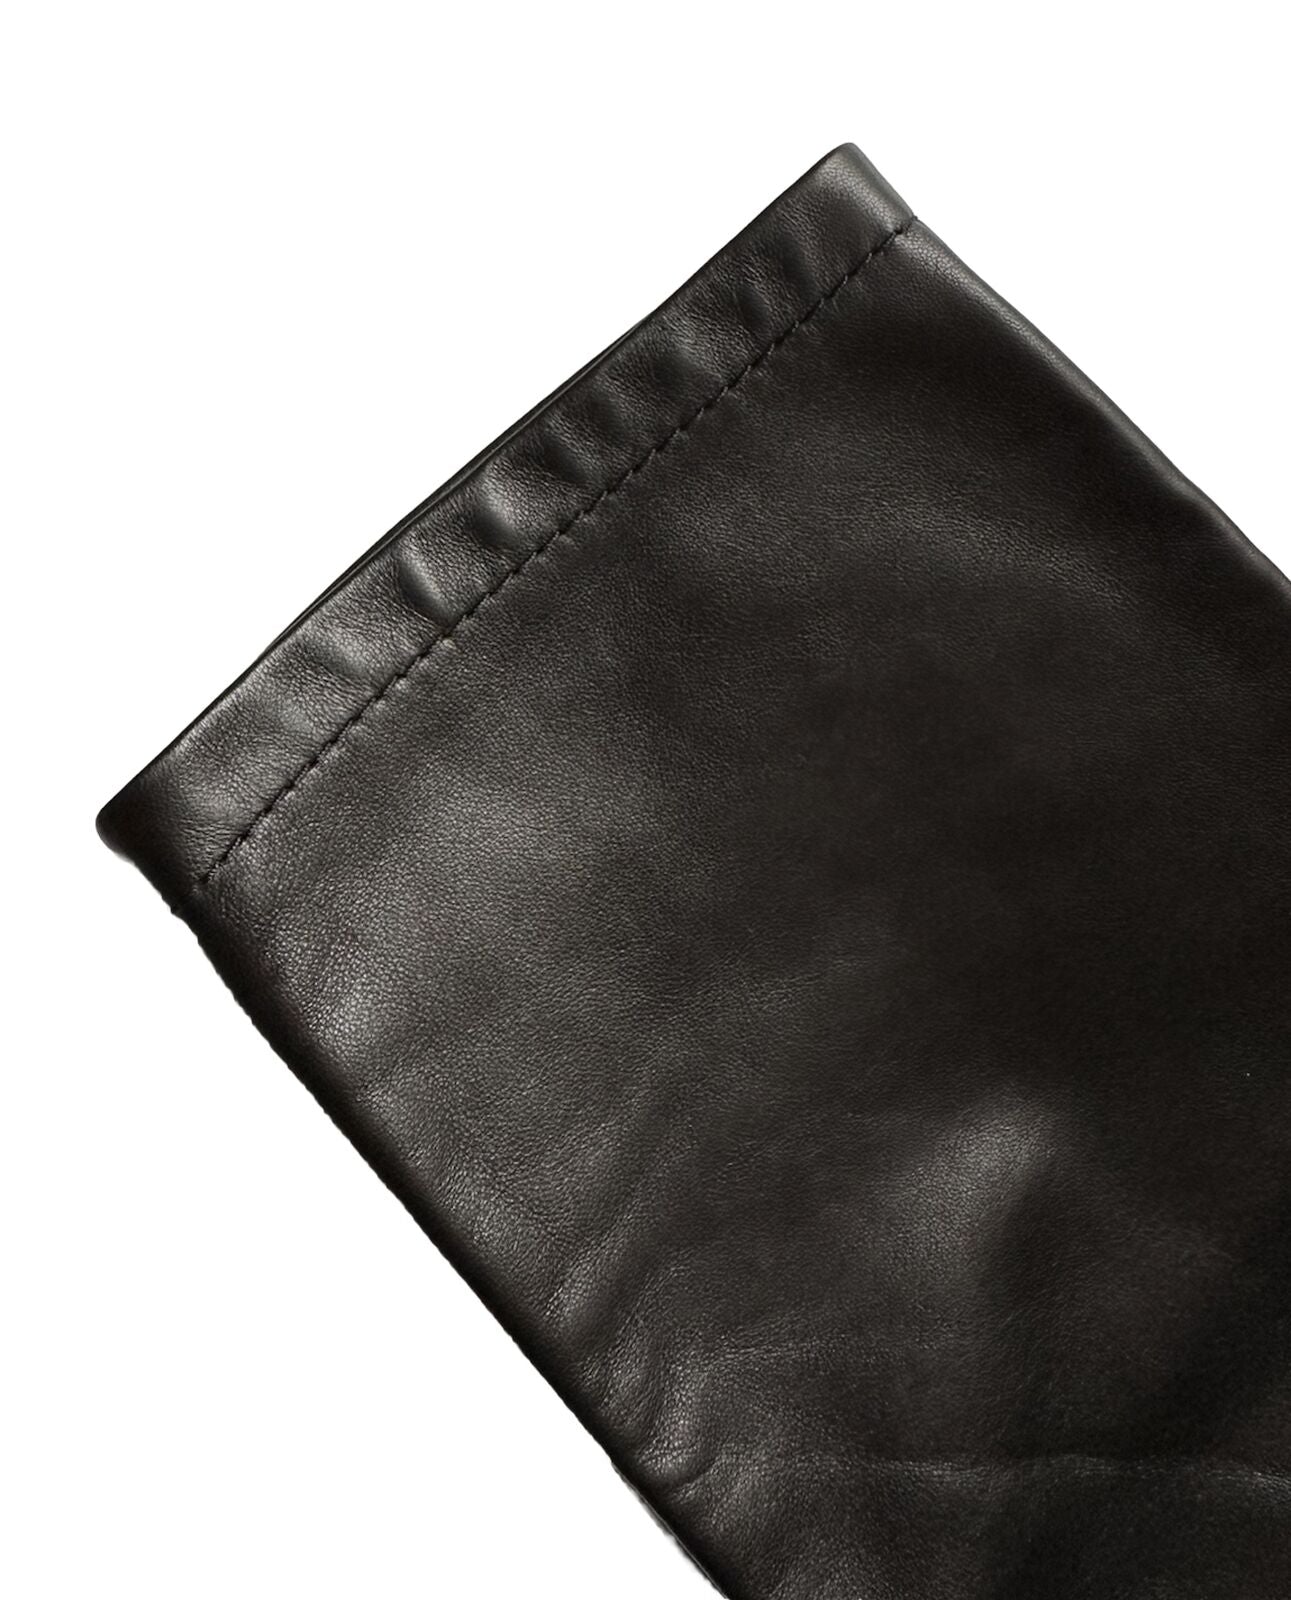 NWT $2390 Ralph Lauren Purple Label Women's Black Soft Leather Jeans 4 US Italy